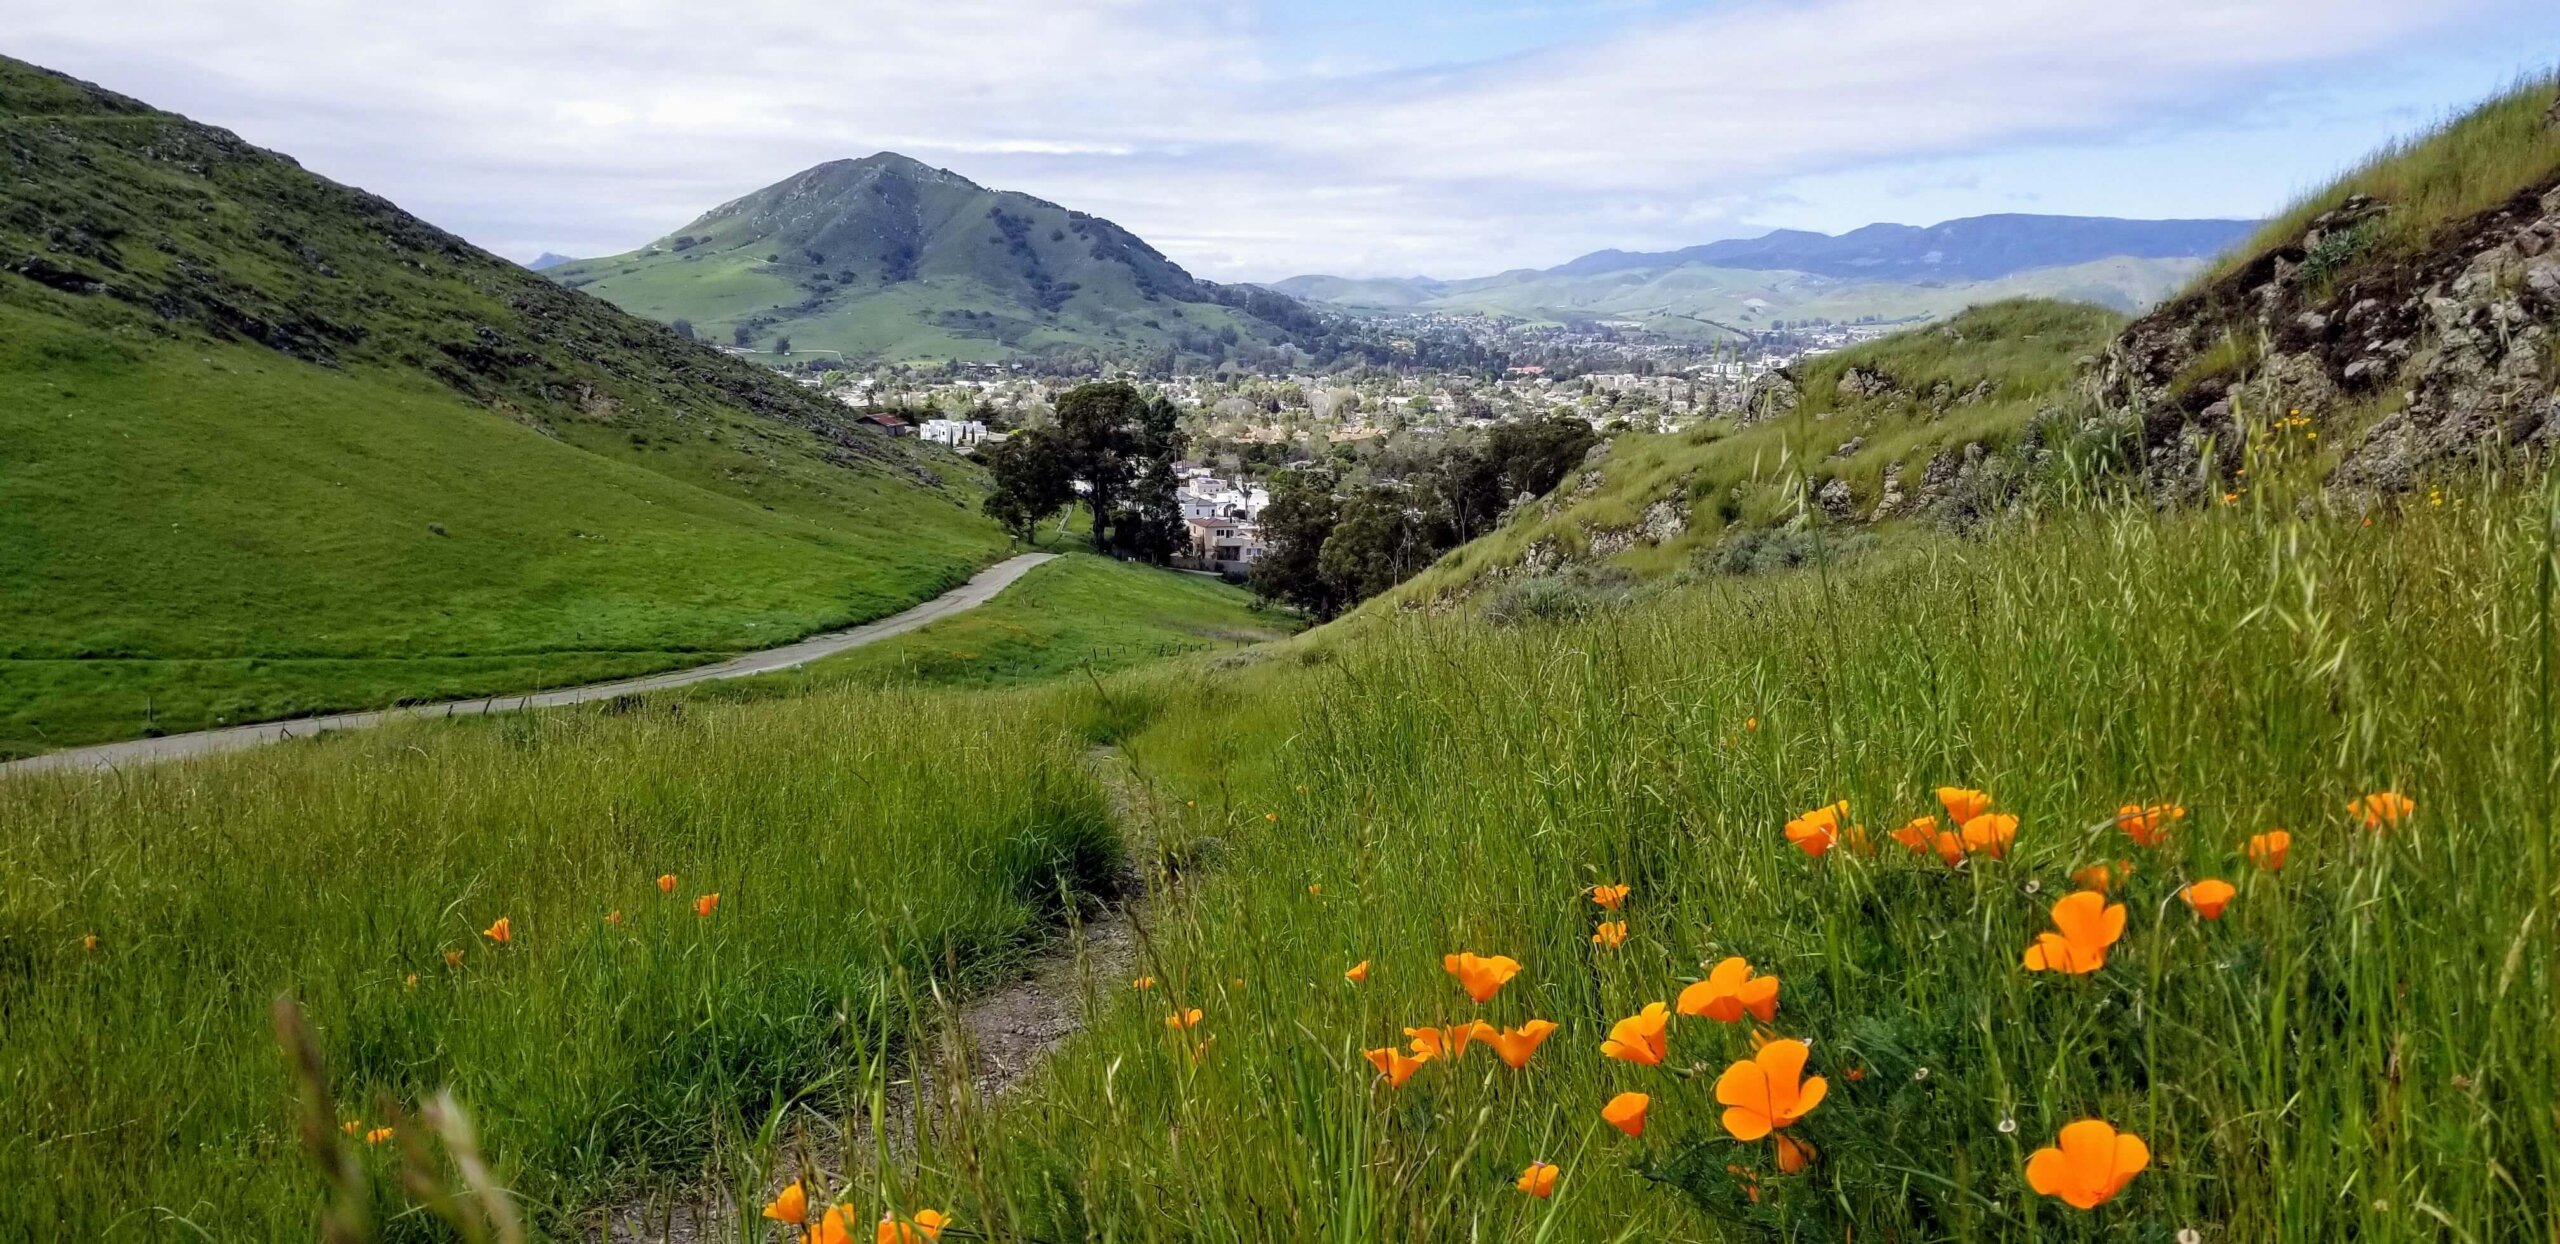 Lush, green, grassy hills with orange poppies in the hills of San Luis Obispo.